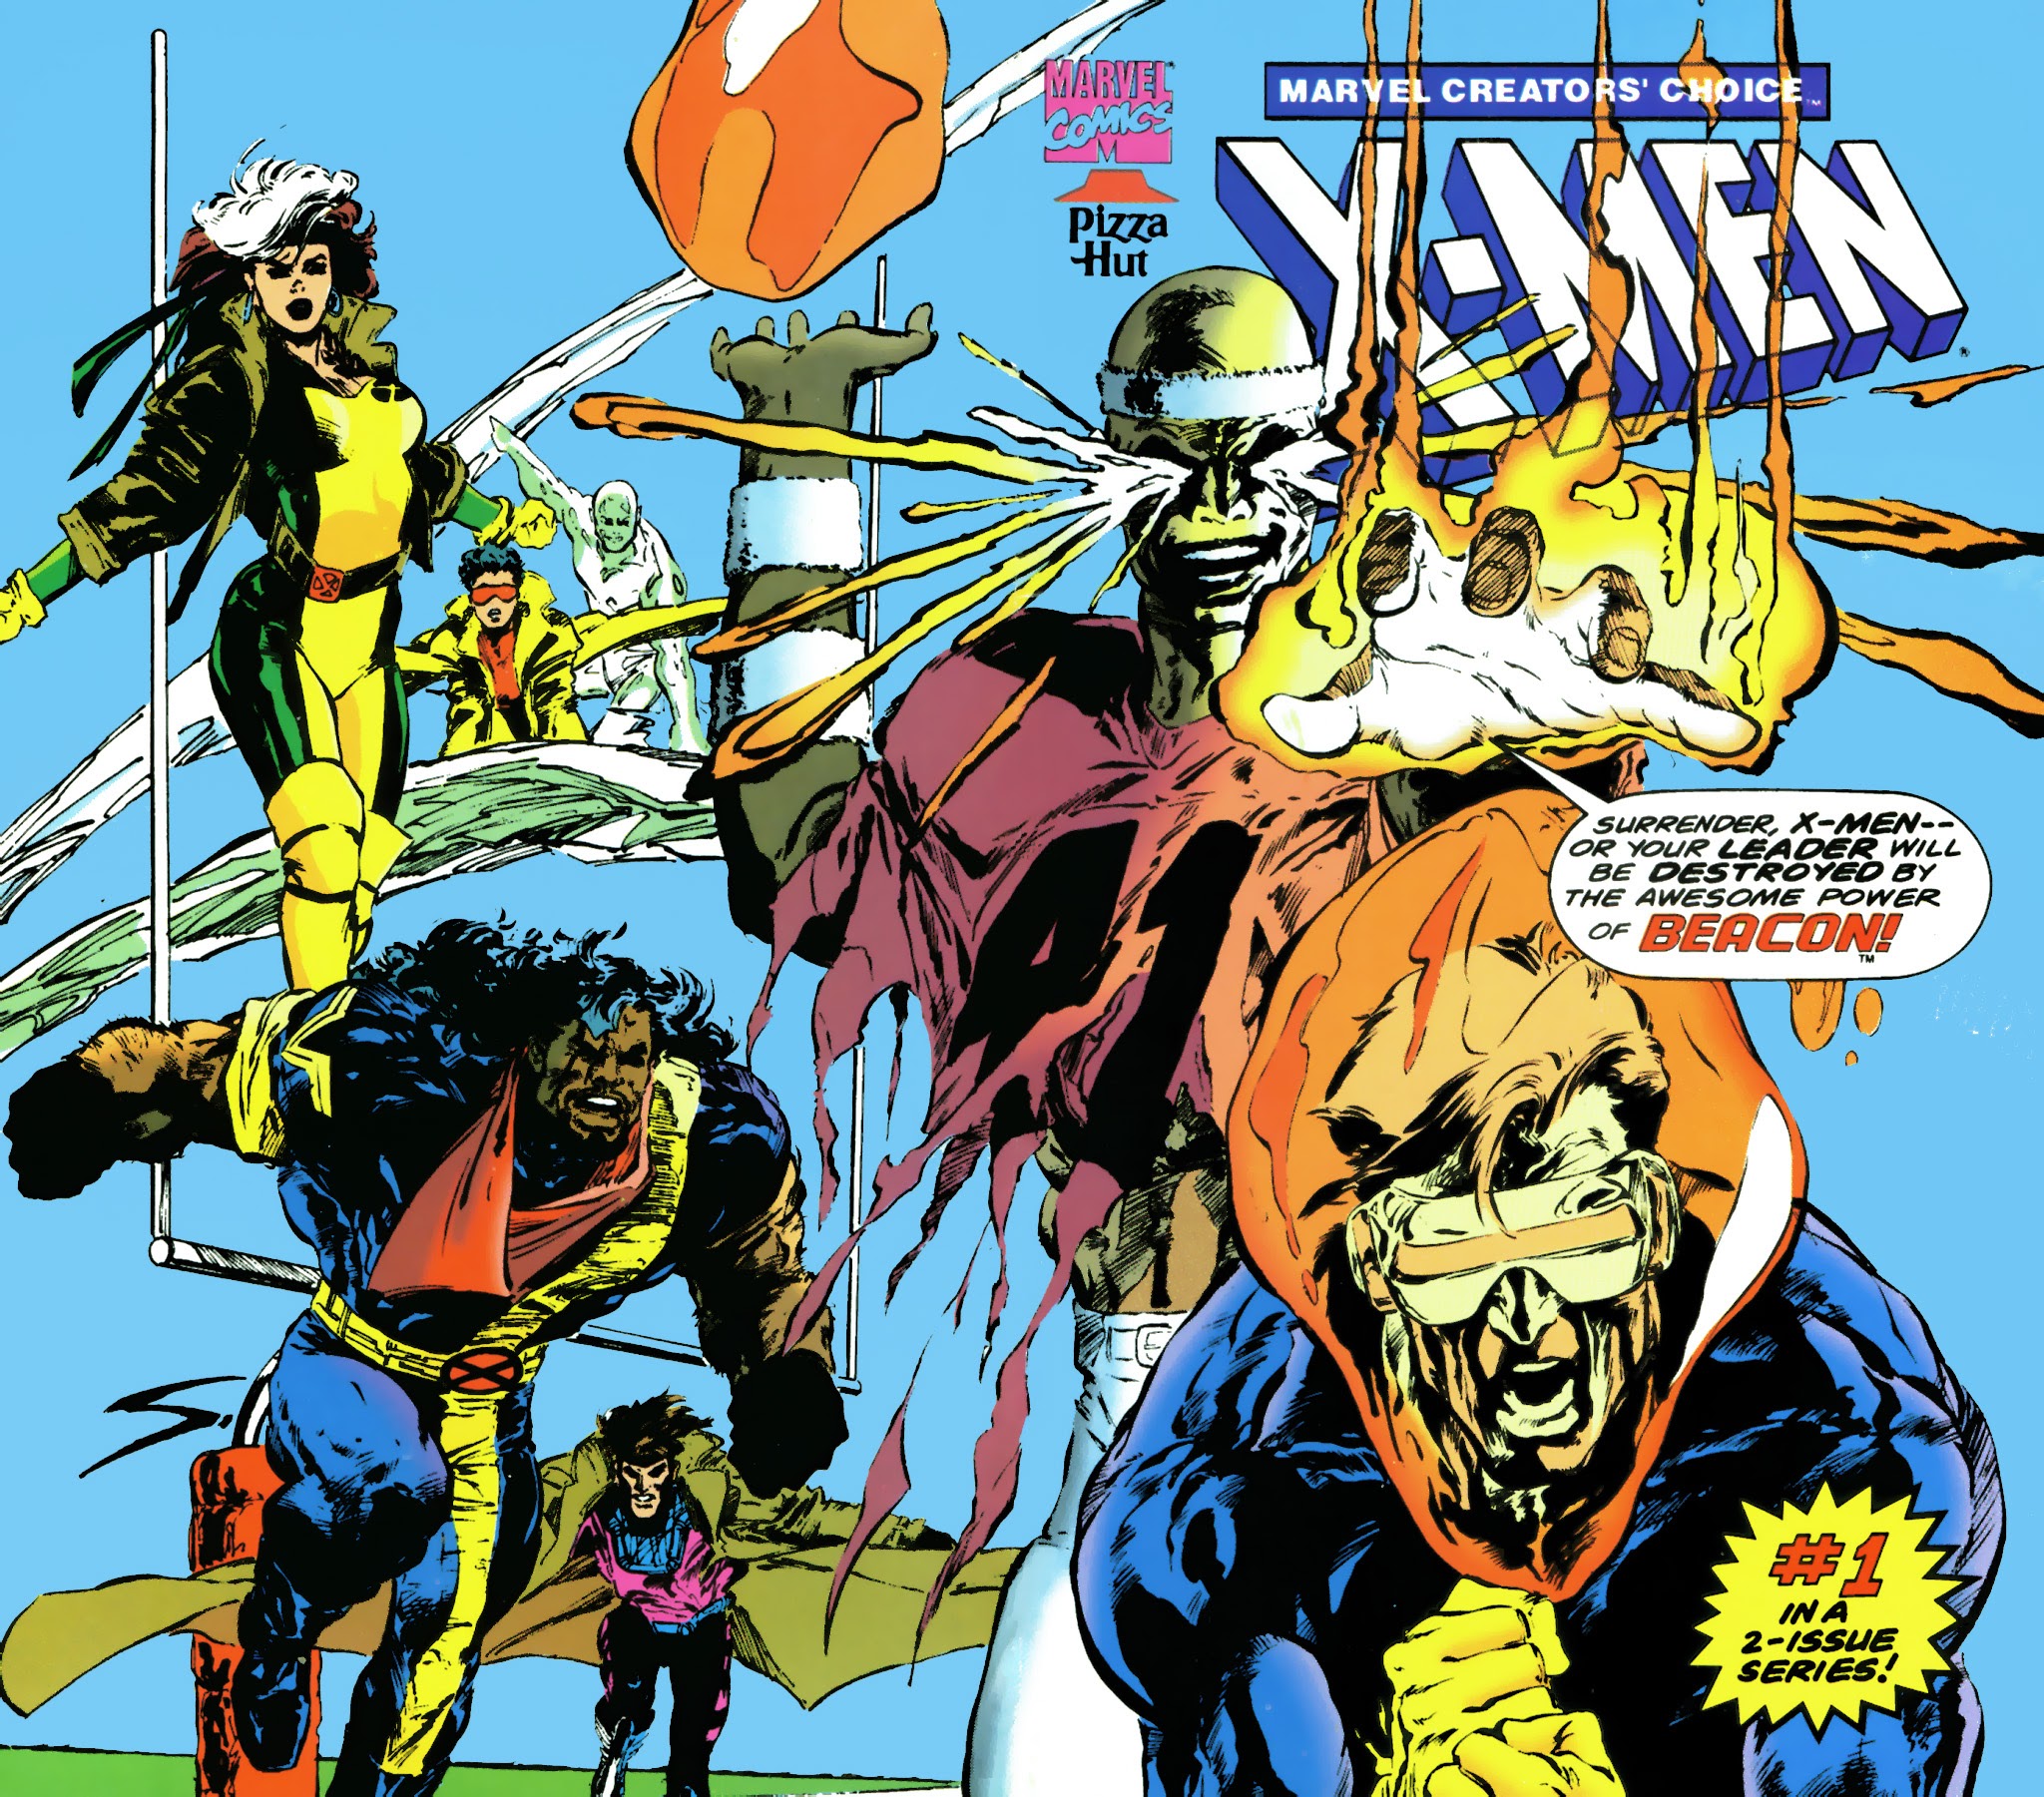 Read online Marvel Creators' Choice X-men comic -  Issue #1 - 1